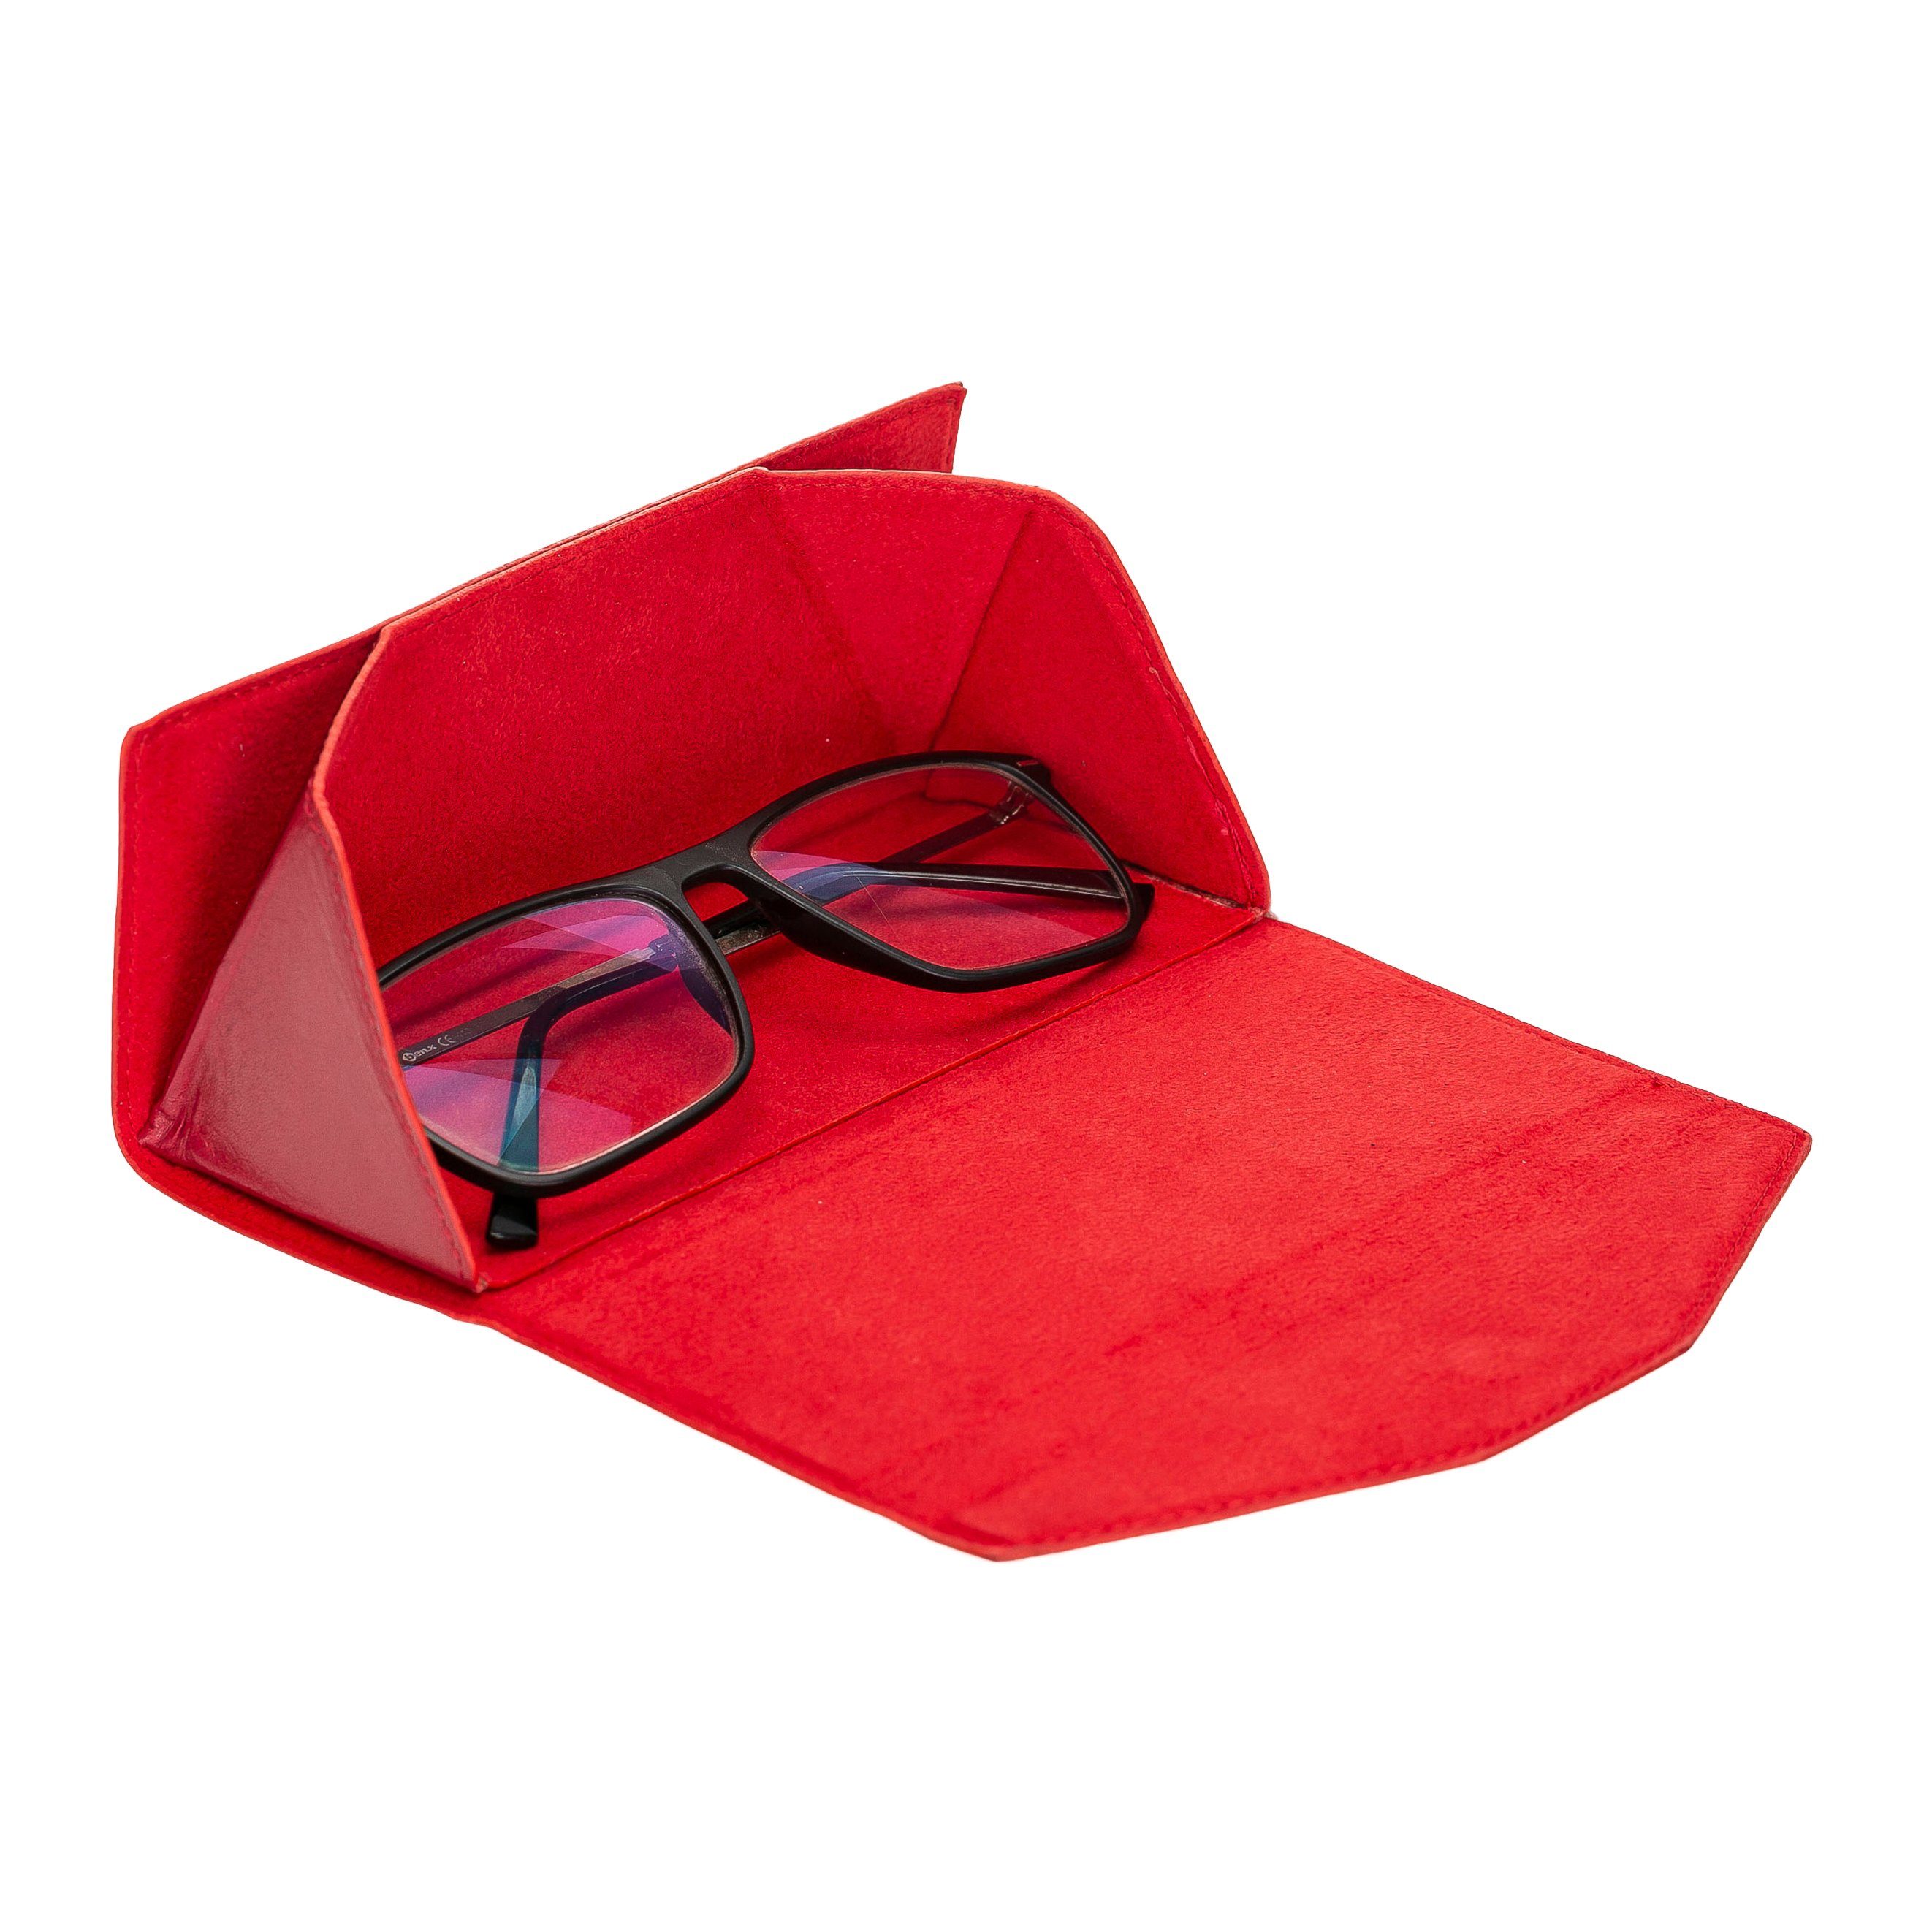 Solo Pelle Brillenetui Faltbares Brillenetui zum Rot tragbare echtem aus Leder, falten Brillenbox